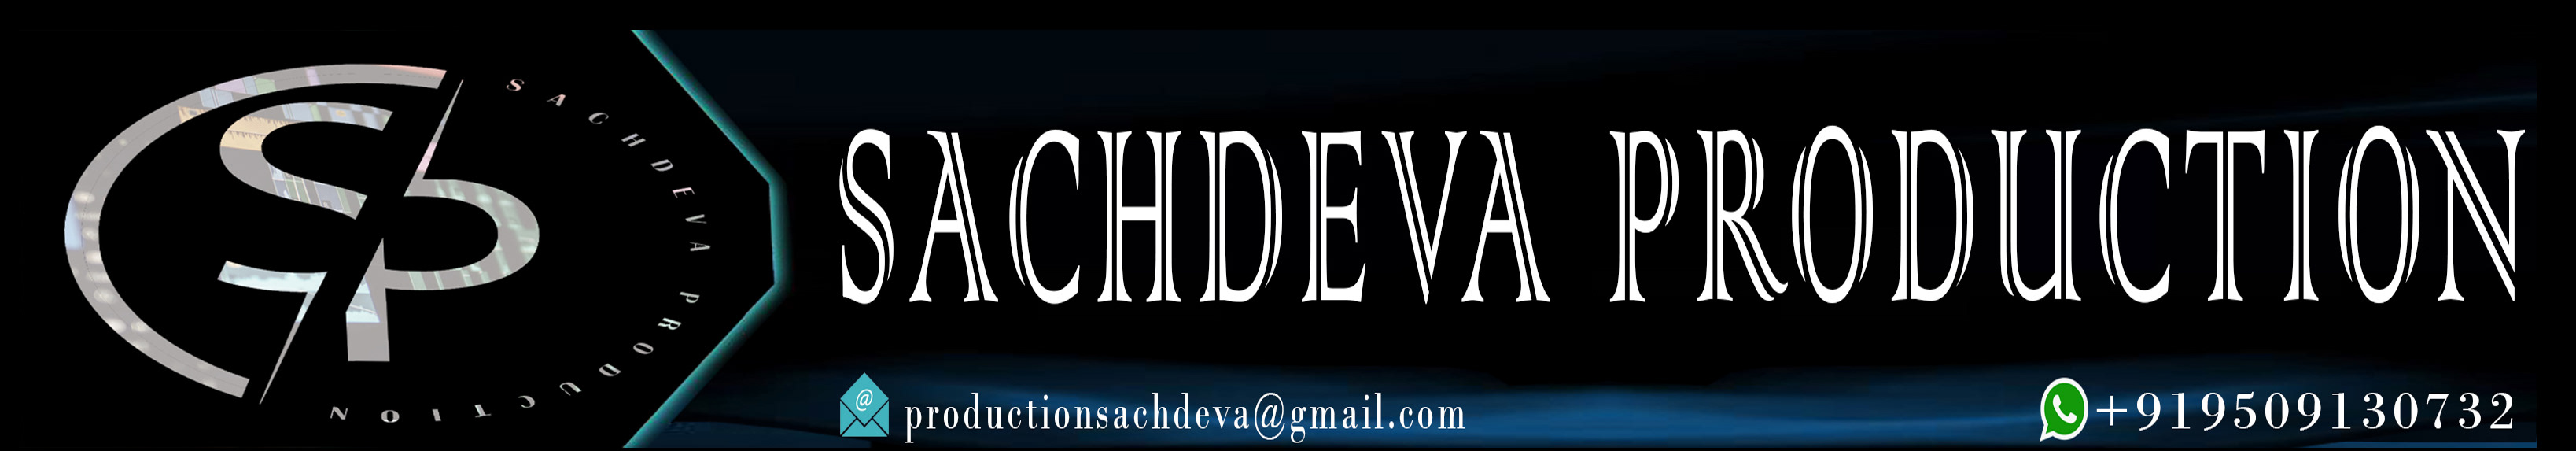 Sachdeva Production's profile banner